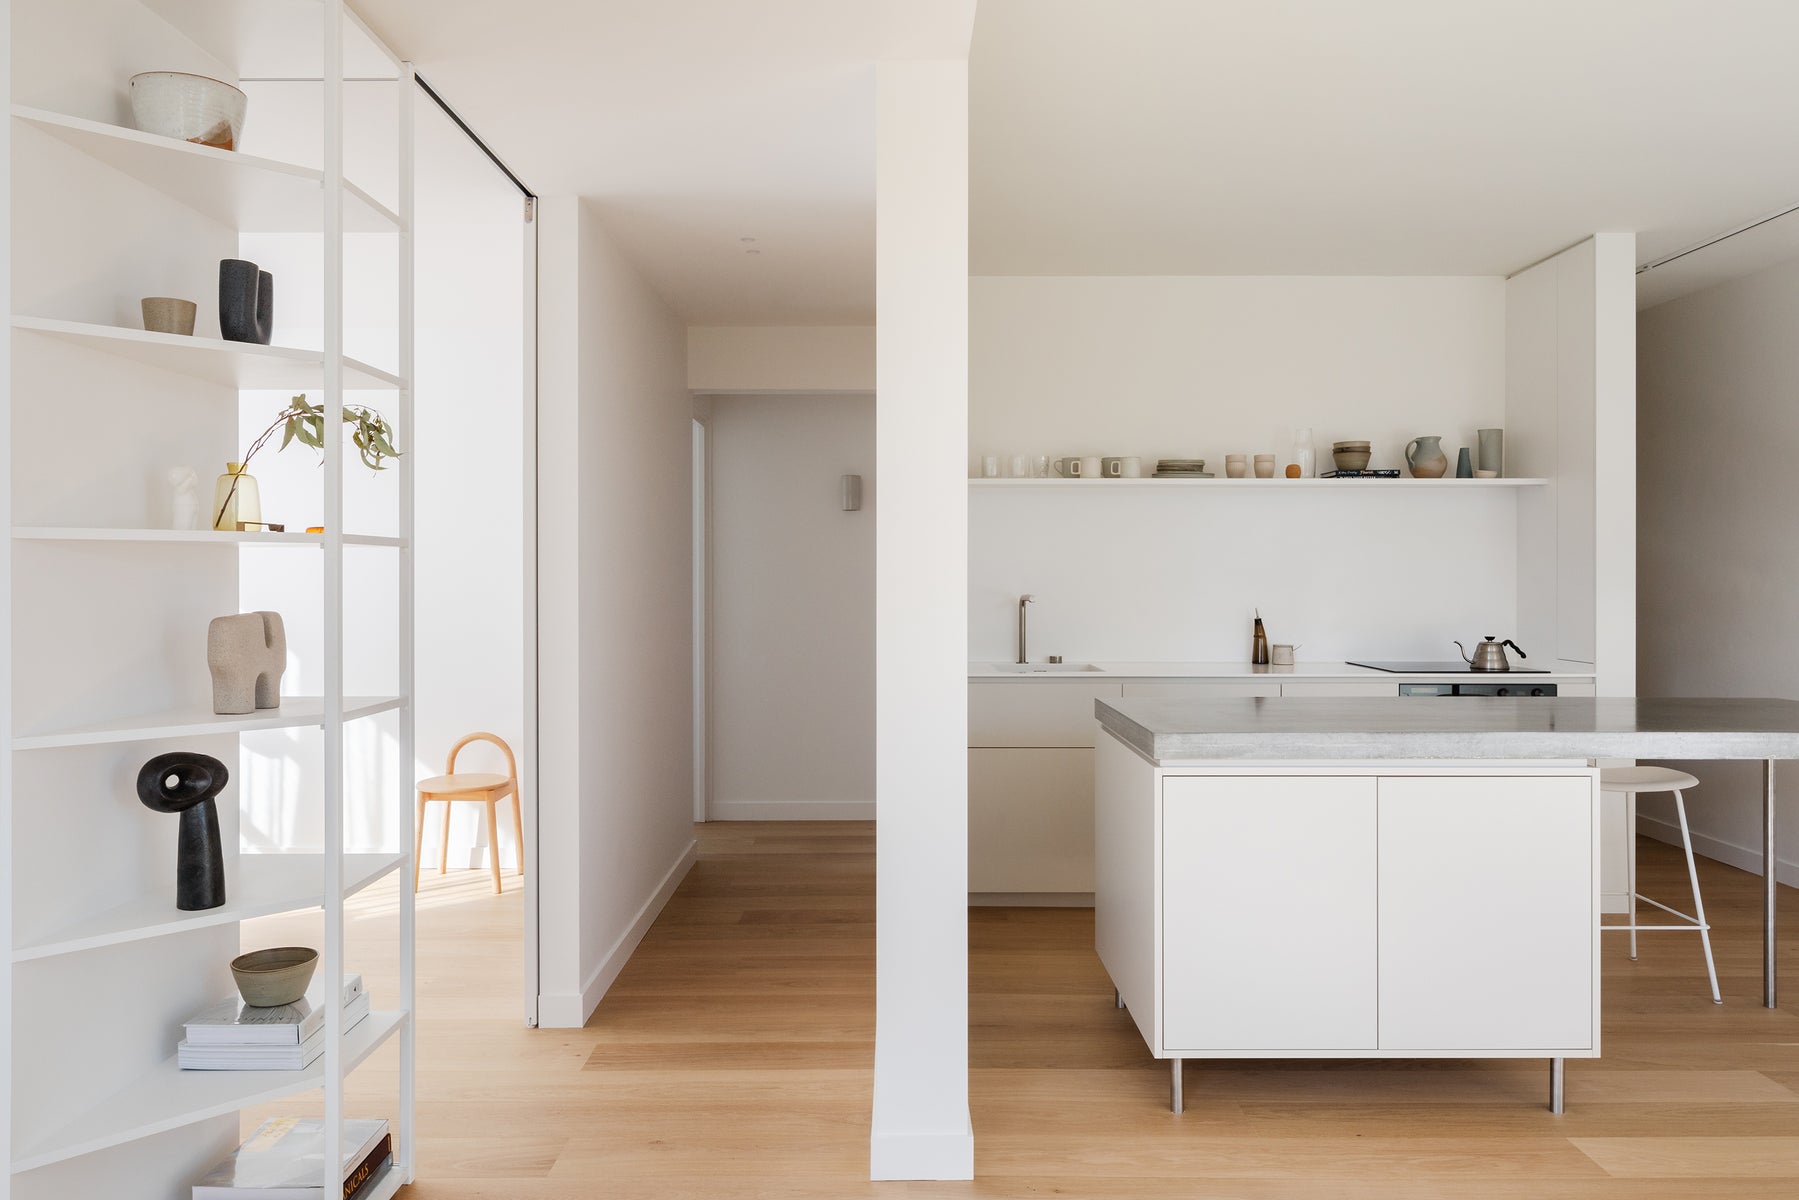 Bobby Low Stool at Inala Apartment by Brad Schwartz Architects| DesignByThem | Gallery